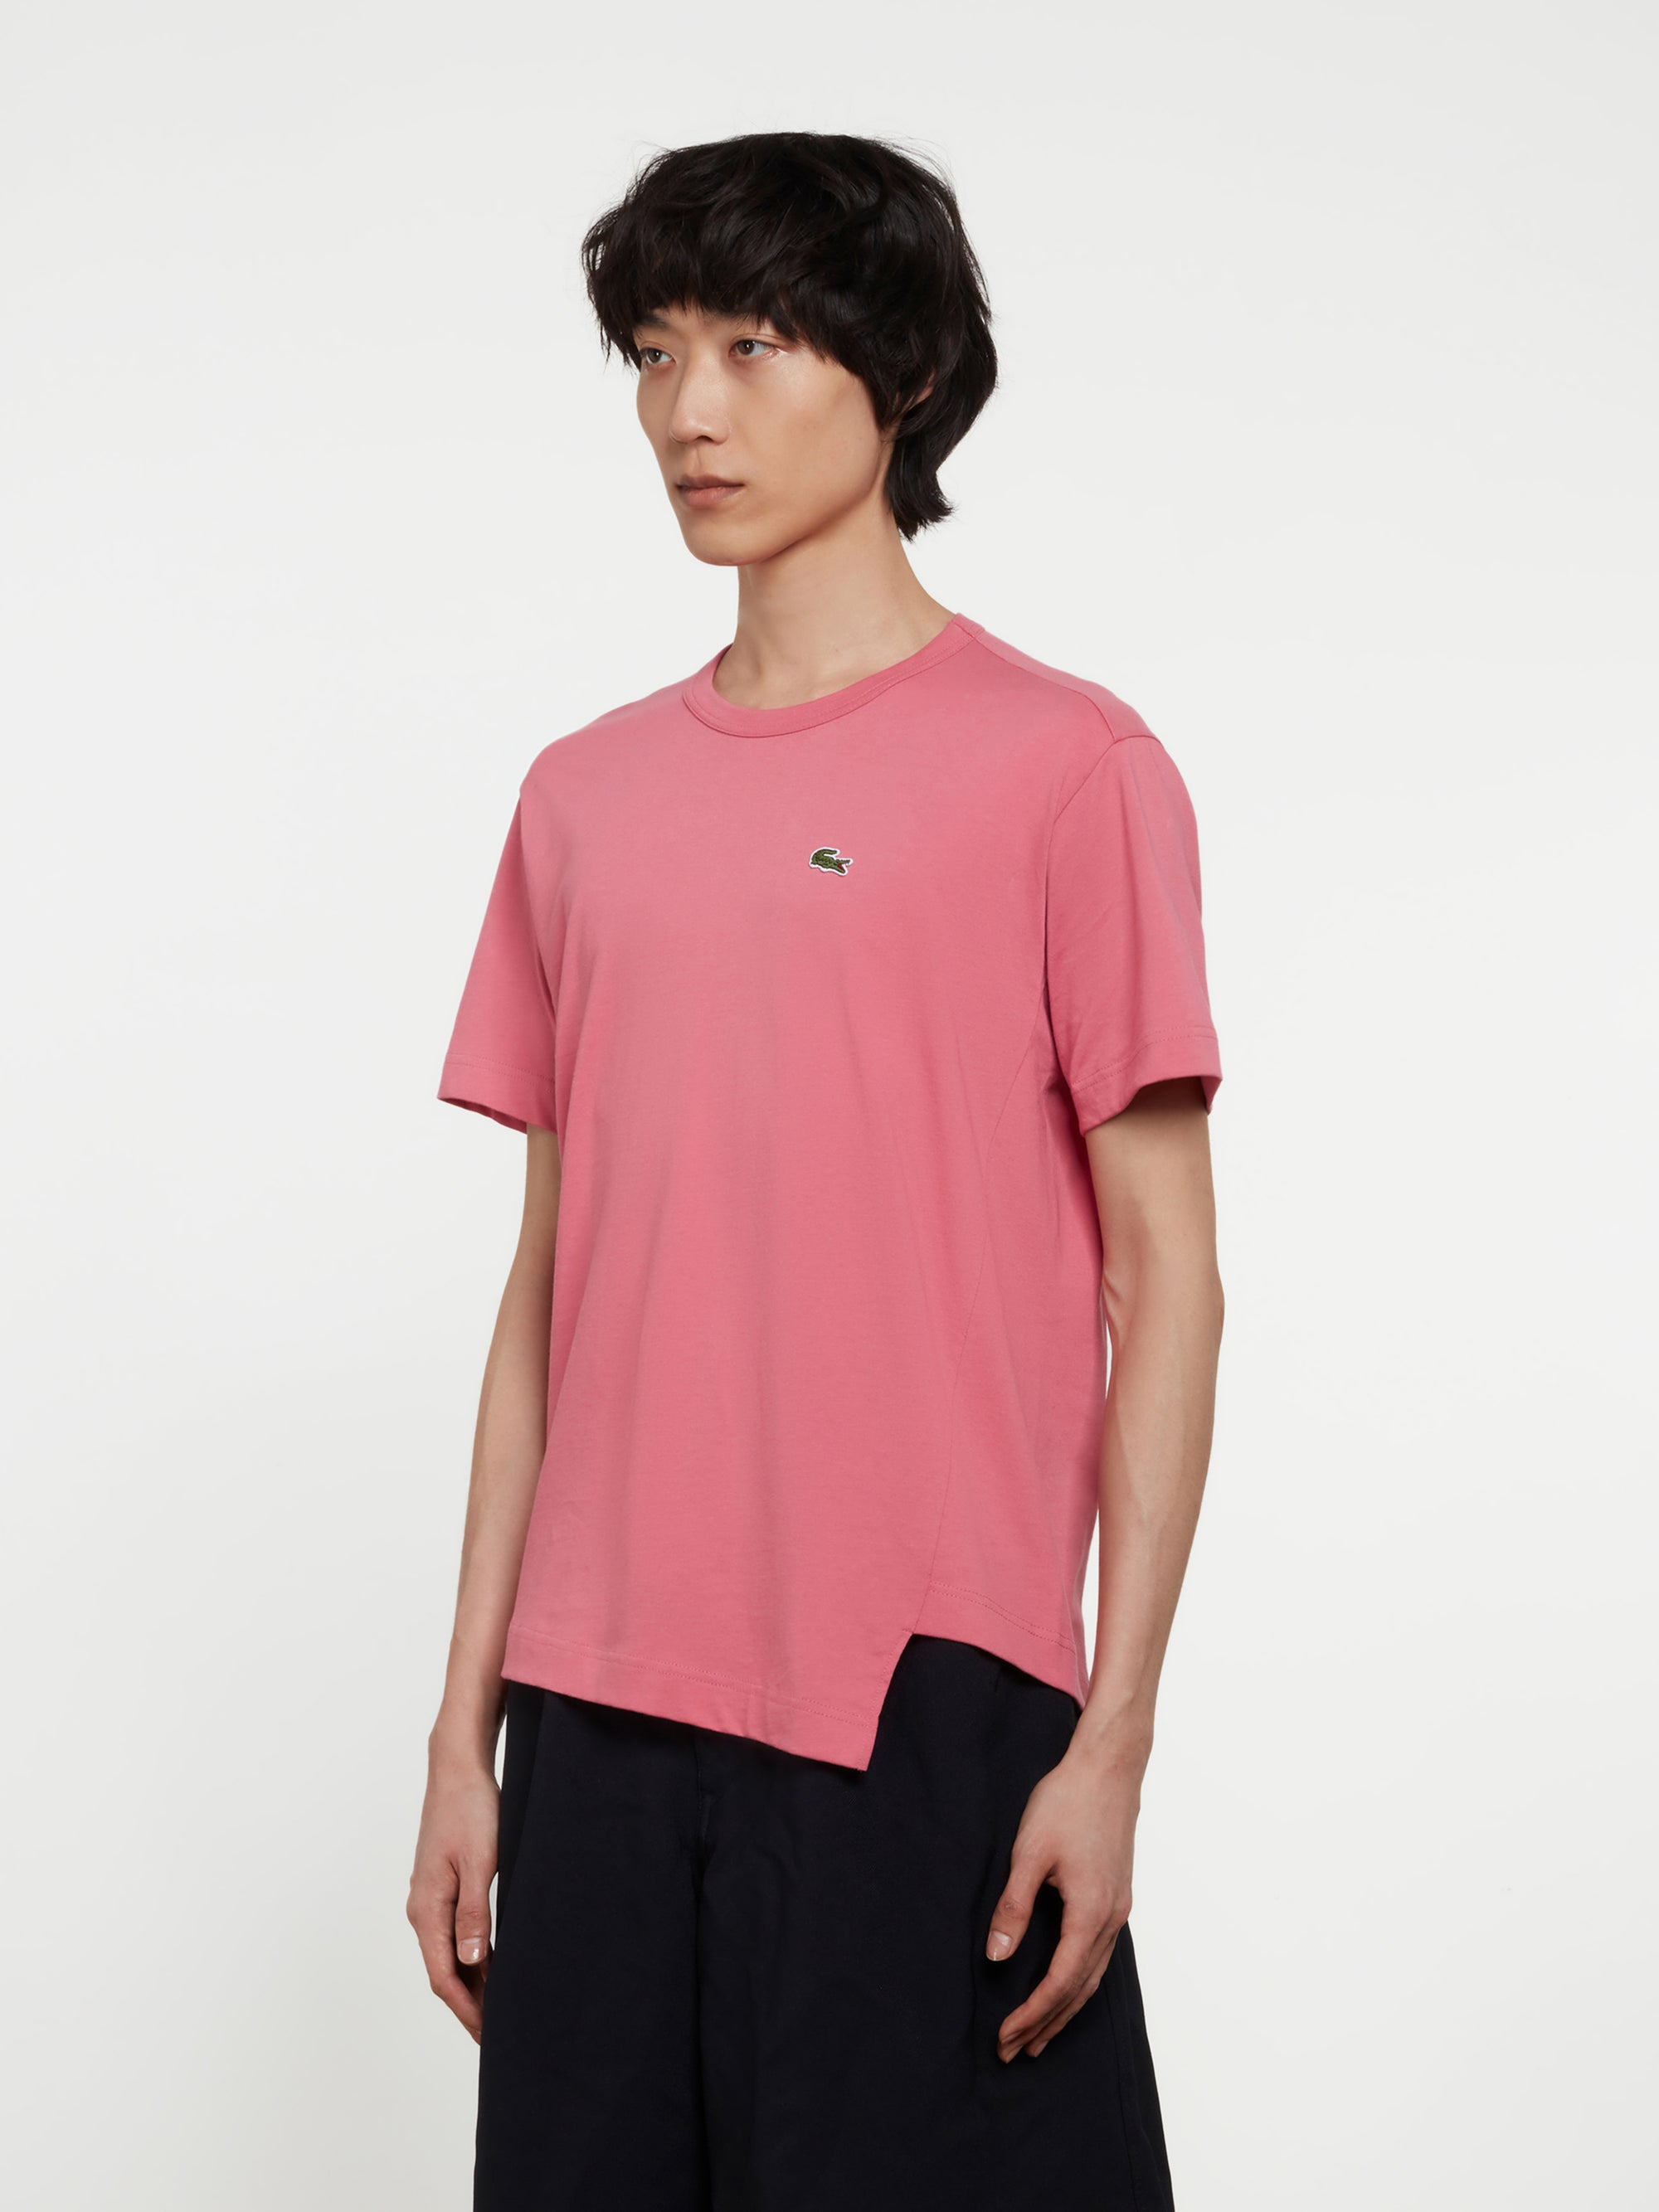 CDG Shirt - Lacoste Men’s T-Shirt - (Pink) view 2